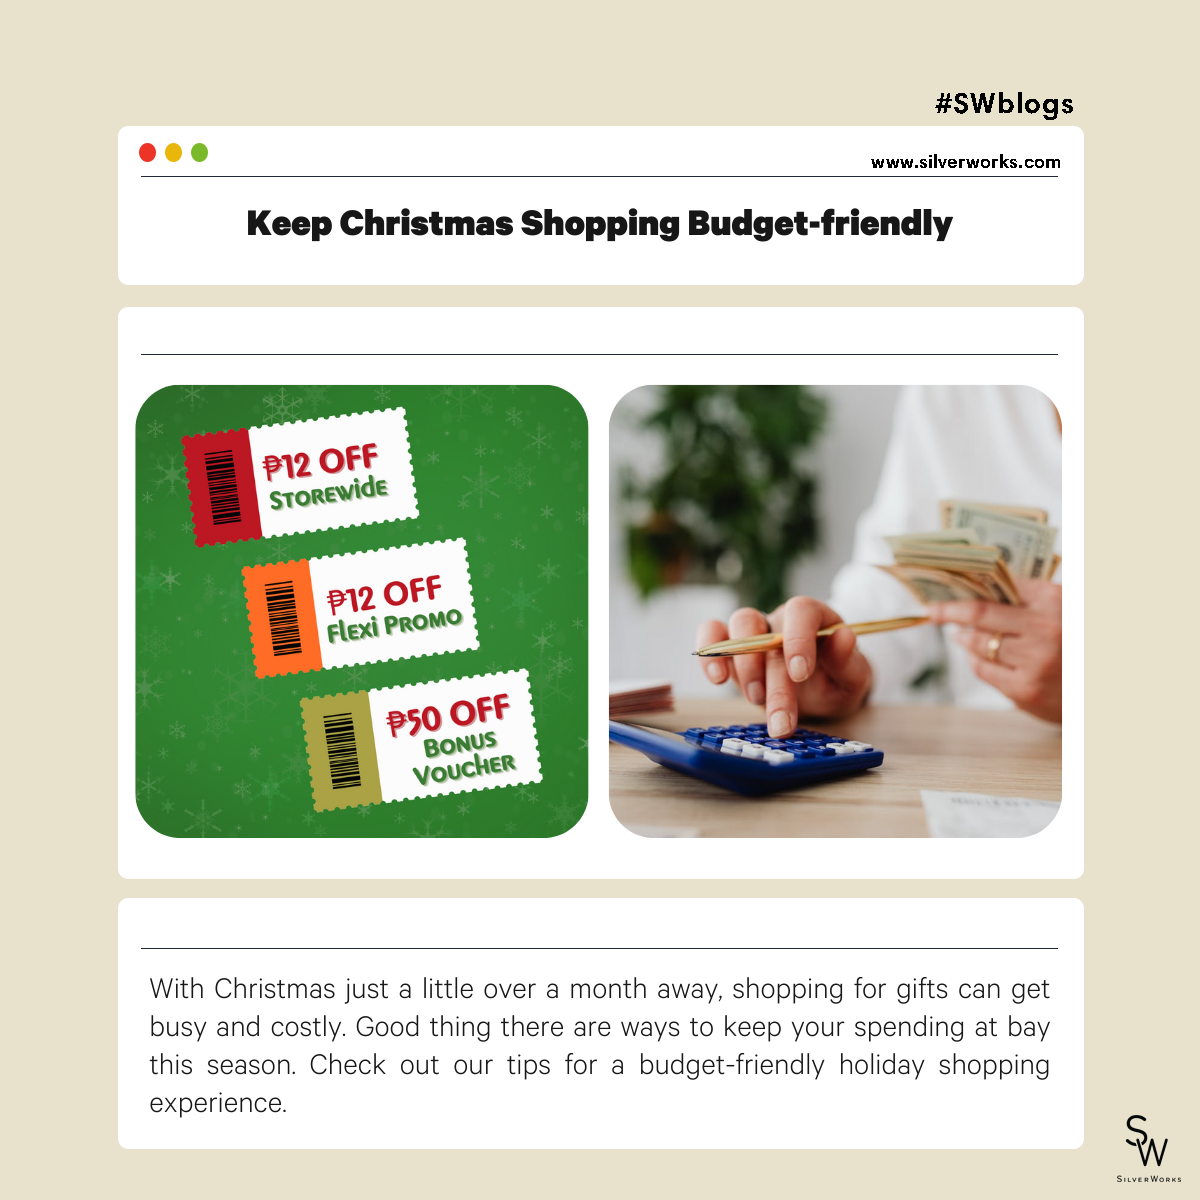 Keep Christmas Shopping Budget-friendly